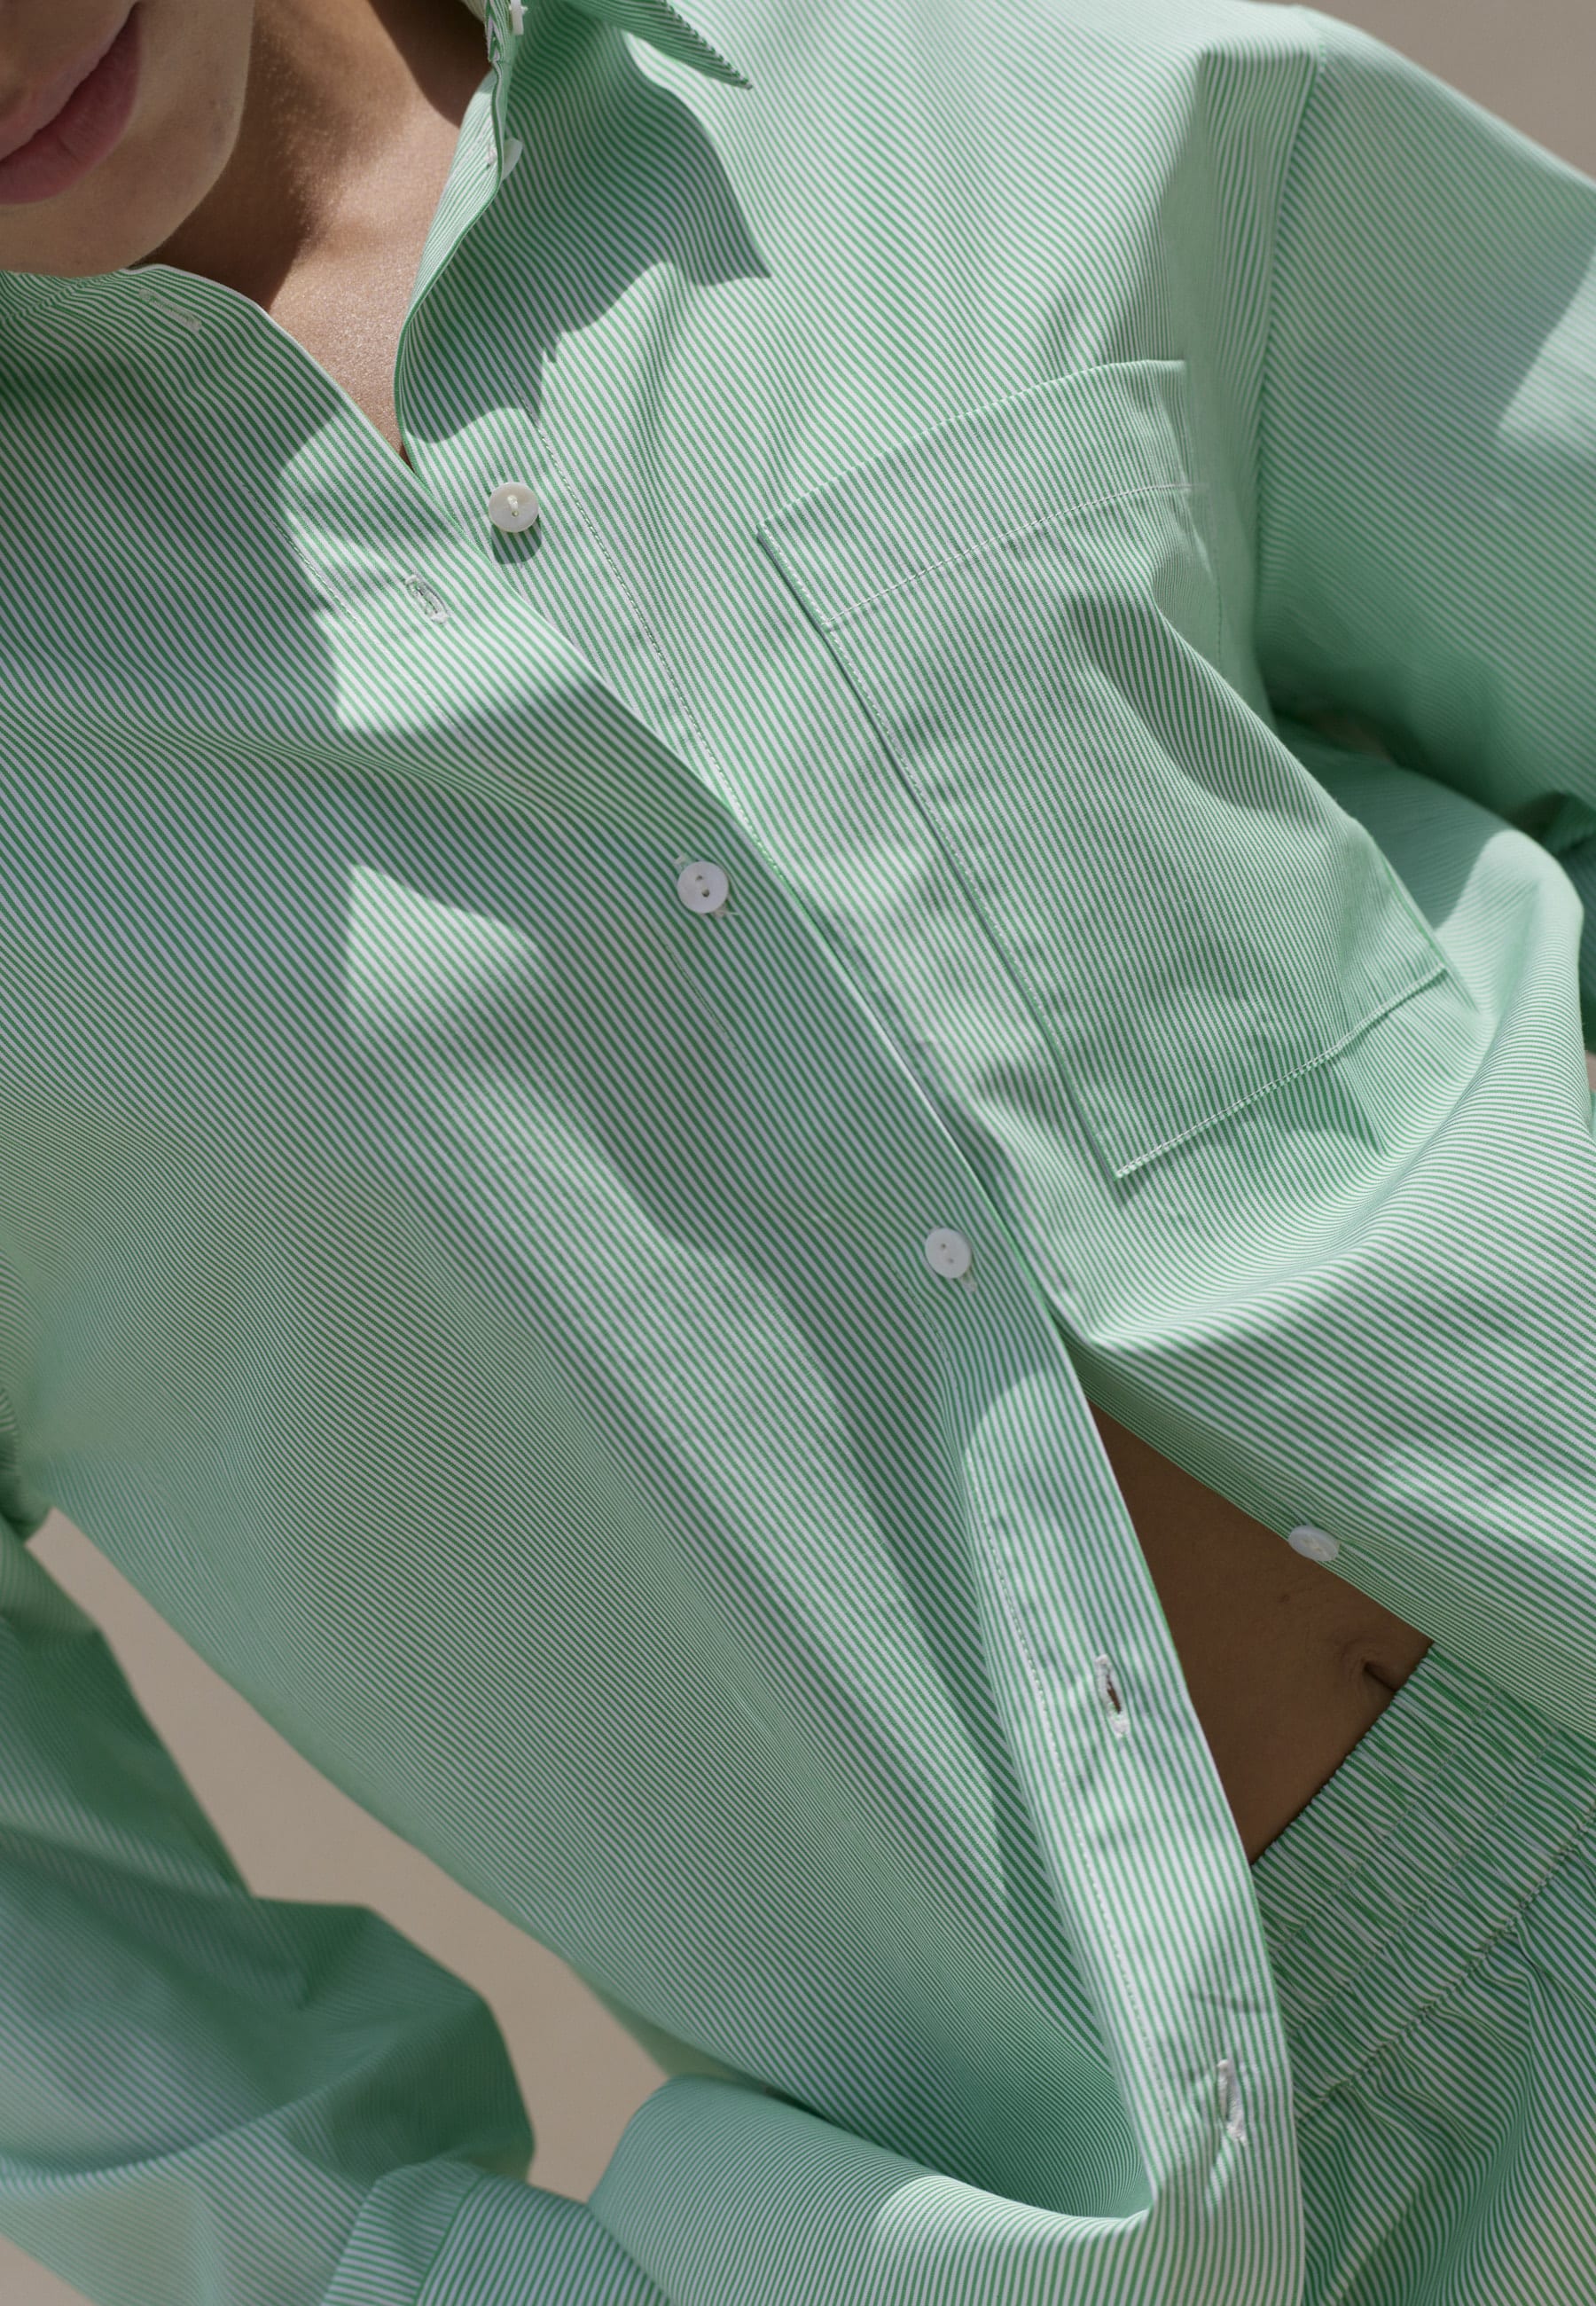 Henriette Shirt Ltd. - Green Stripe